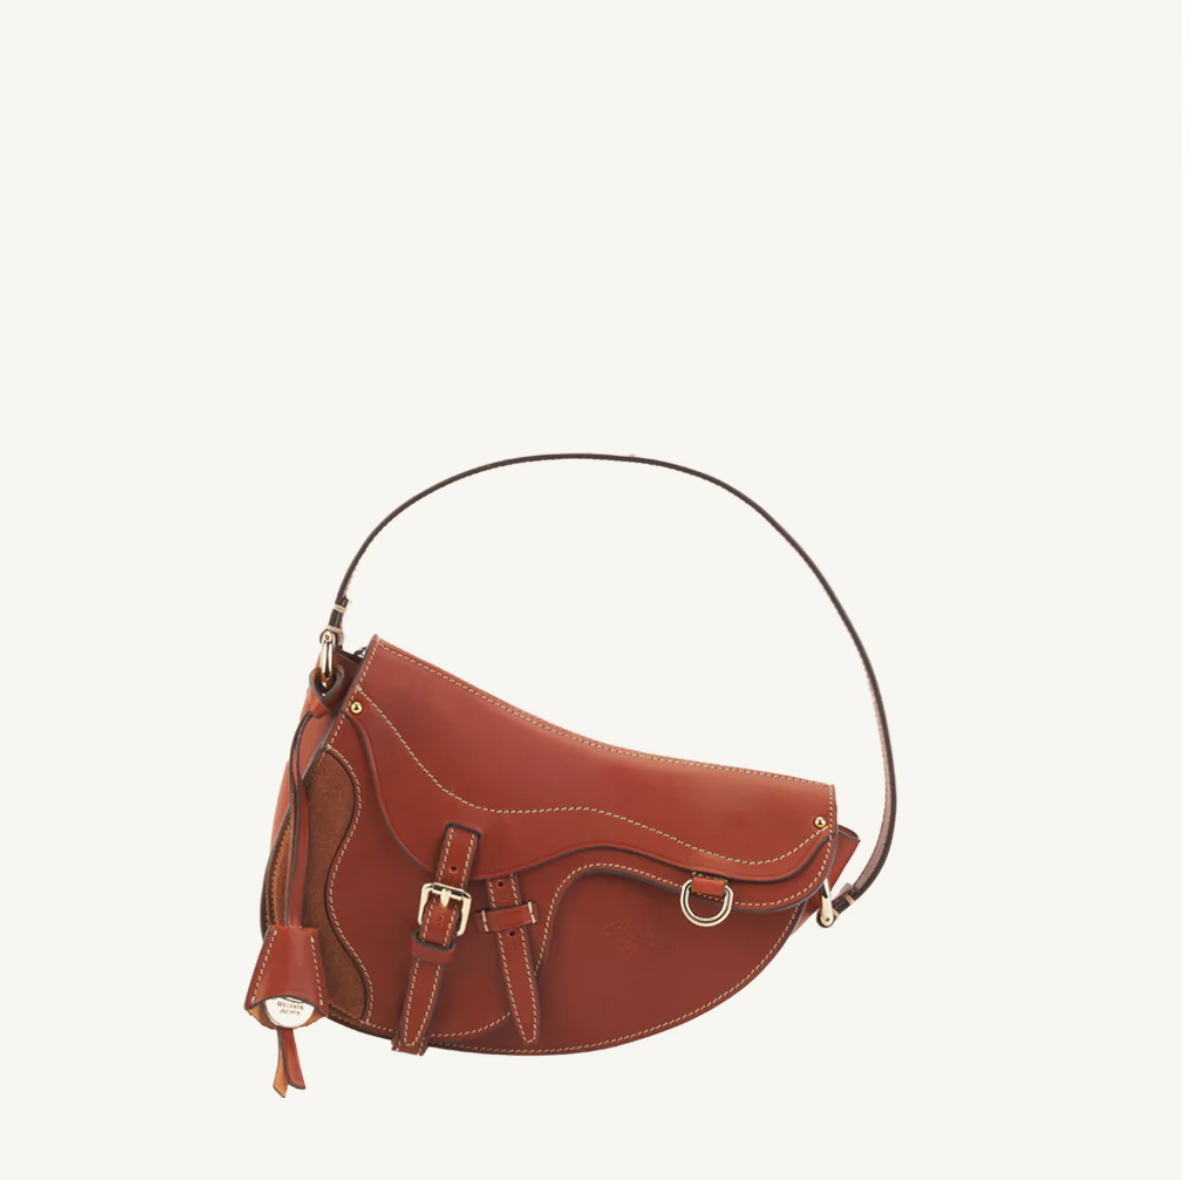 Handbag Made In Italy by Boldrini Selleria